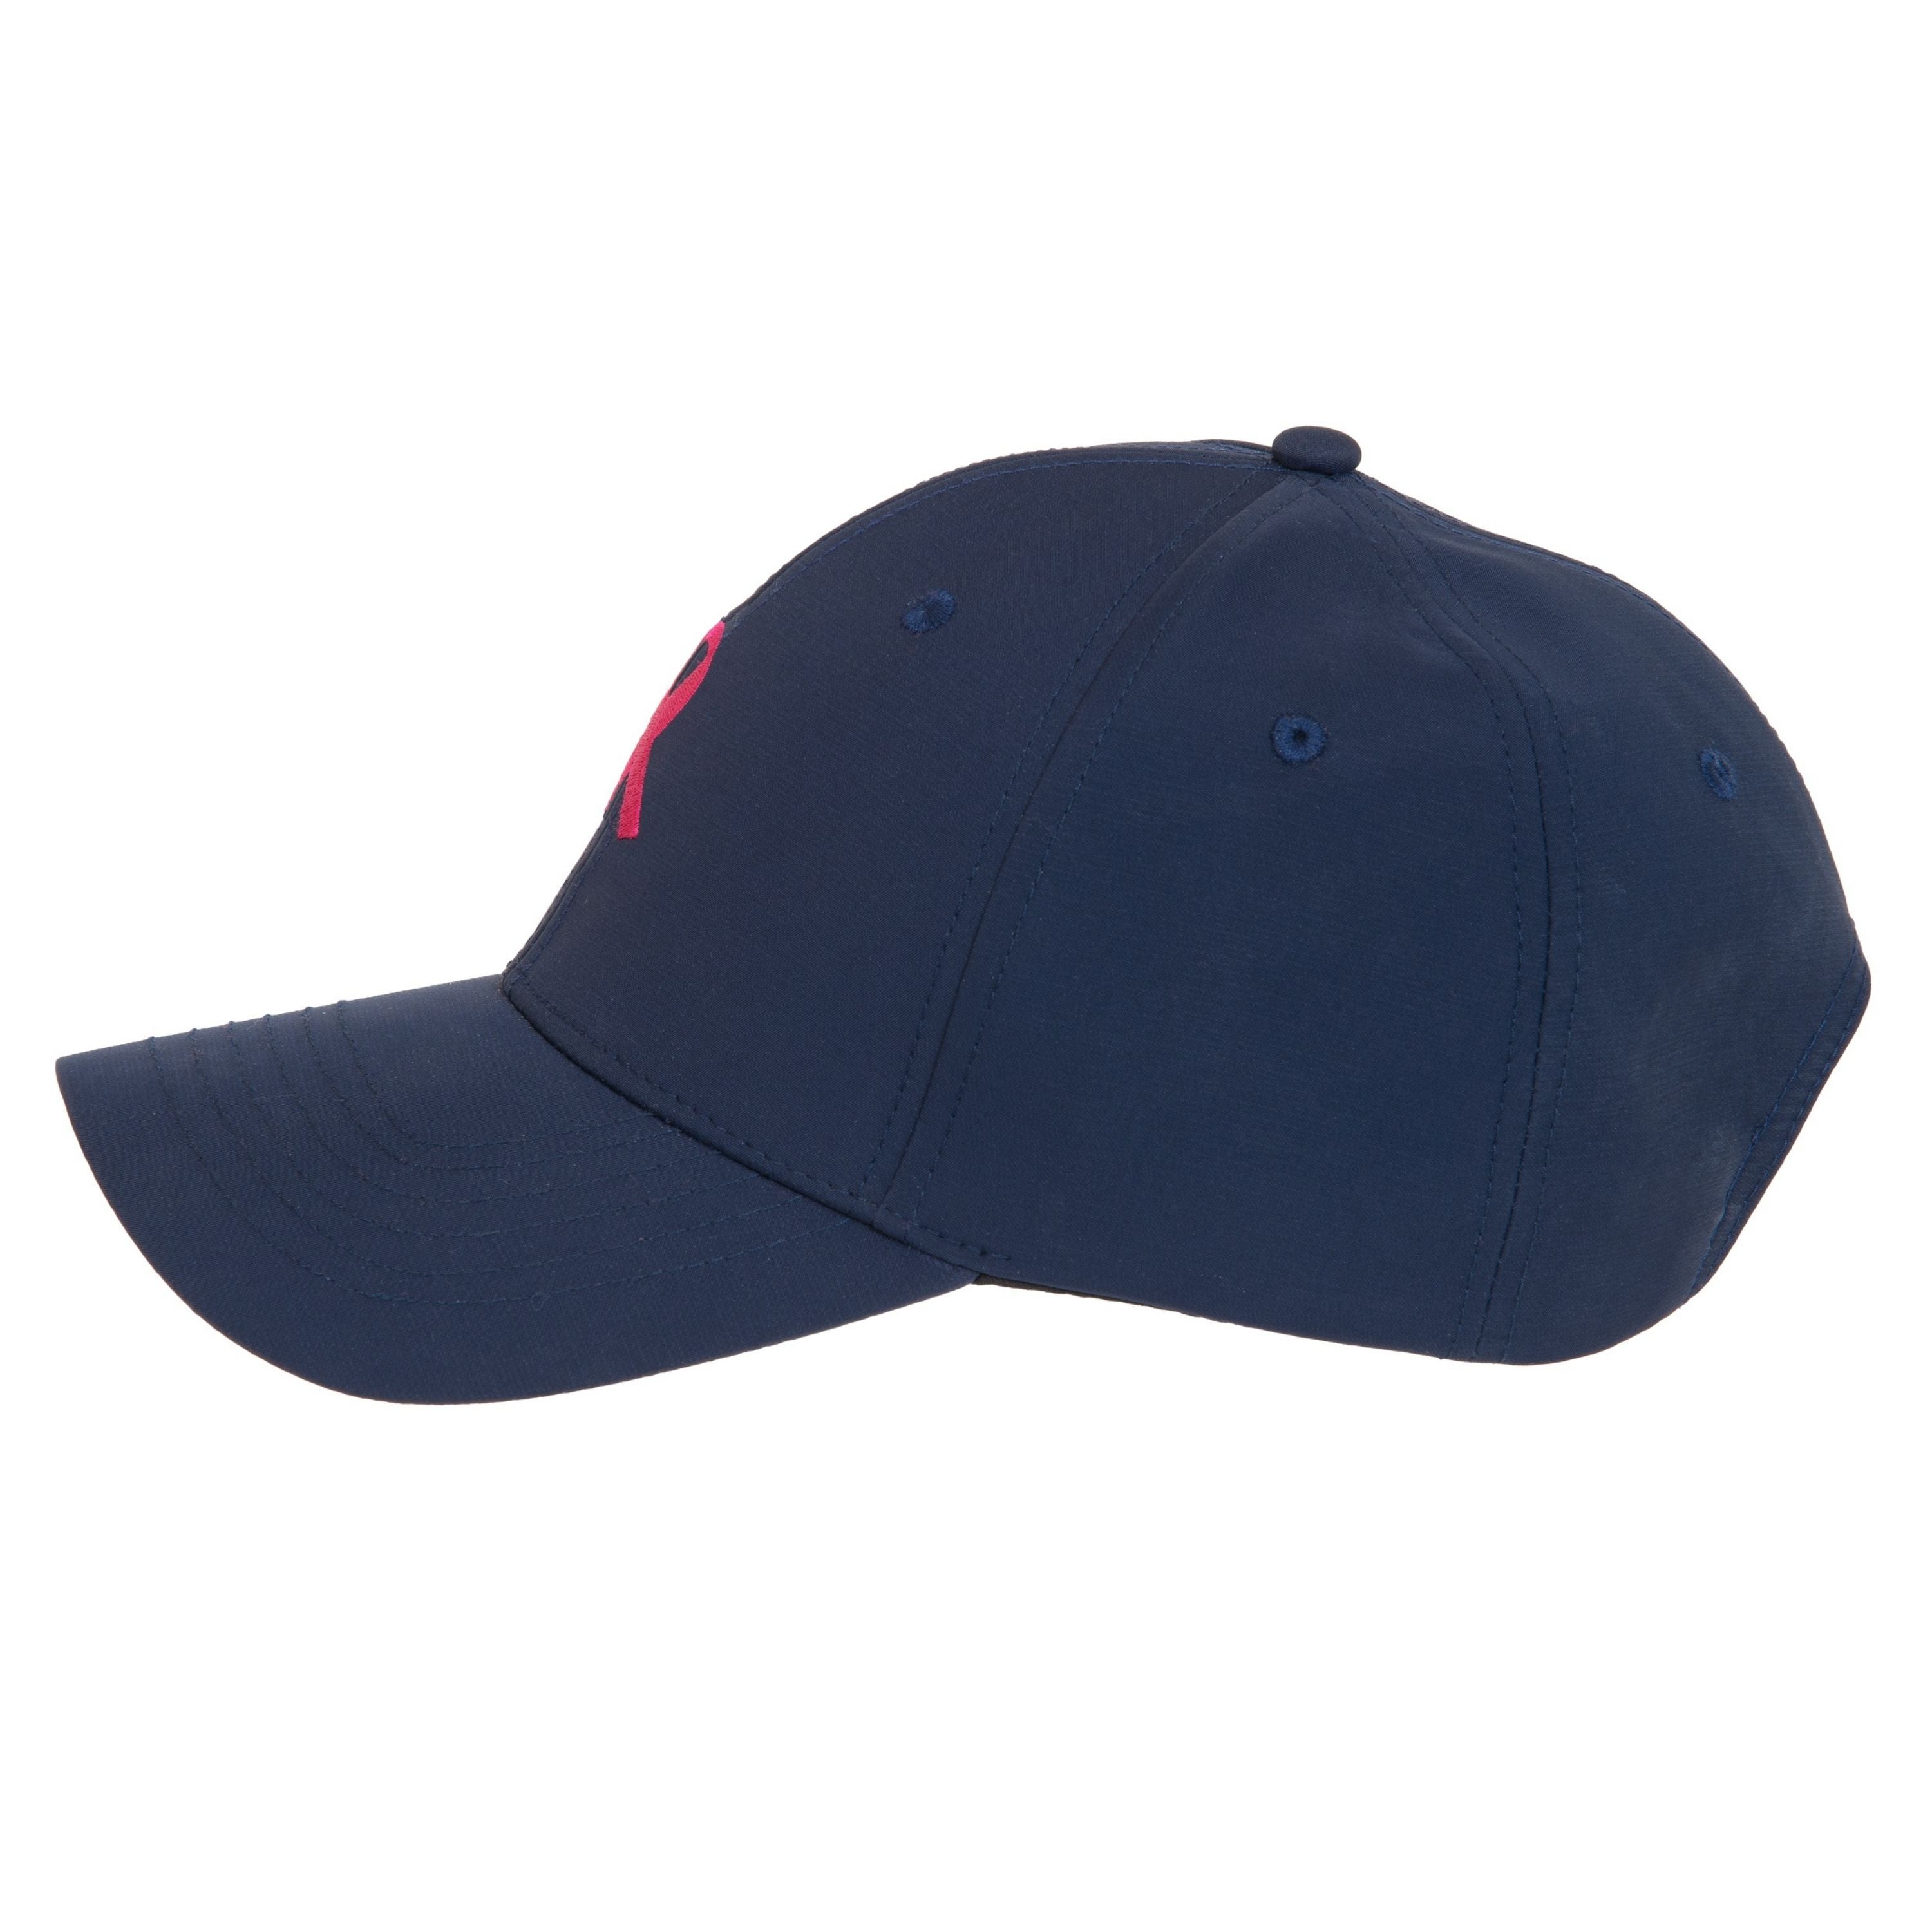 Cotton cap navy - Unisex